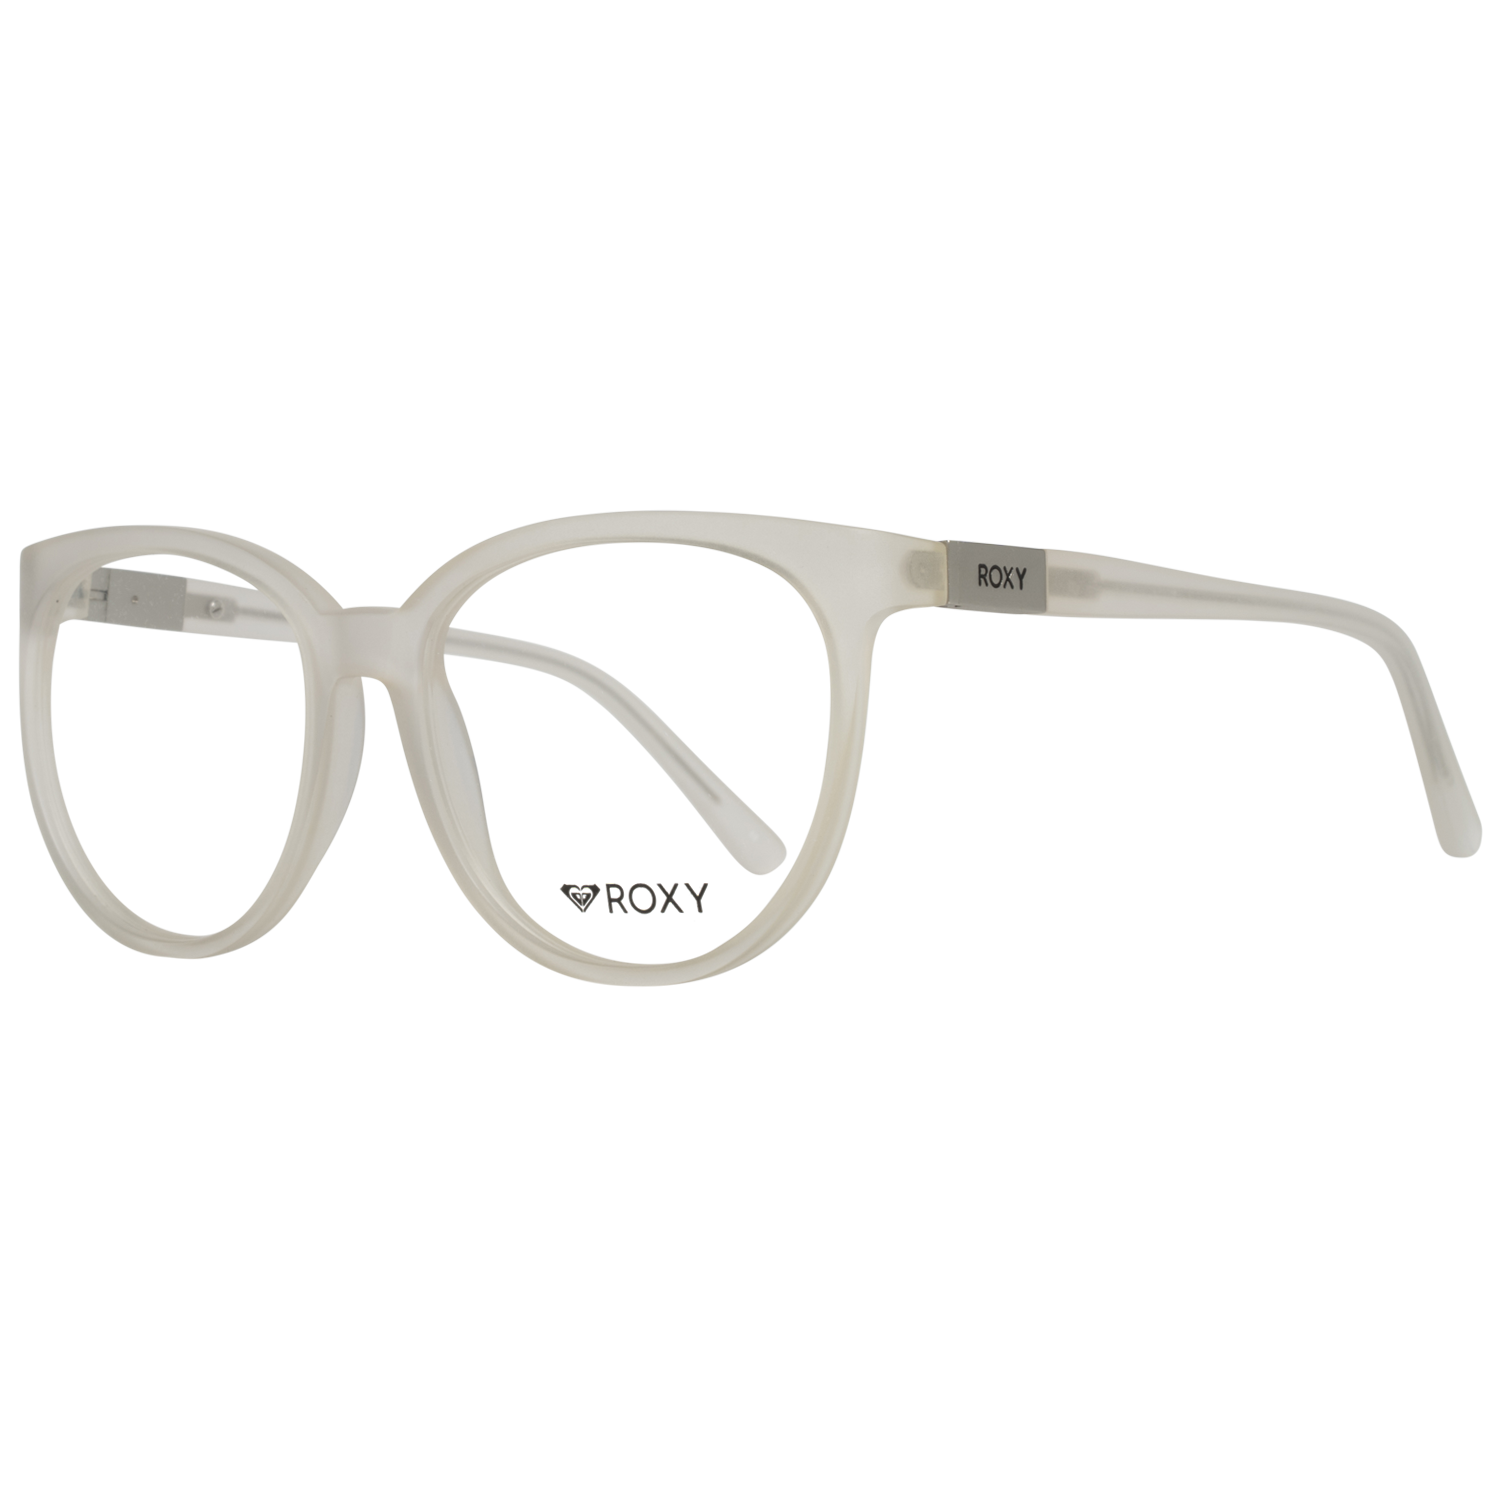 Roxy Frames Roxy Glasses Optical Frame ERJEG03038 WBK0 54 Eyeglasses Eyewear UK USA Australia 